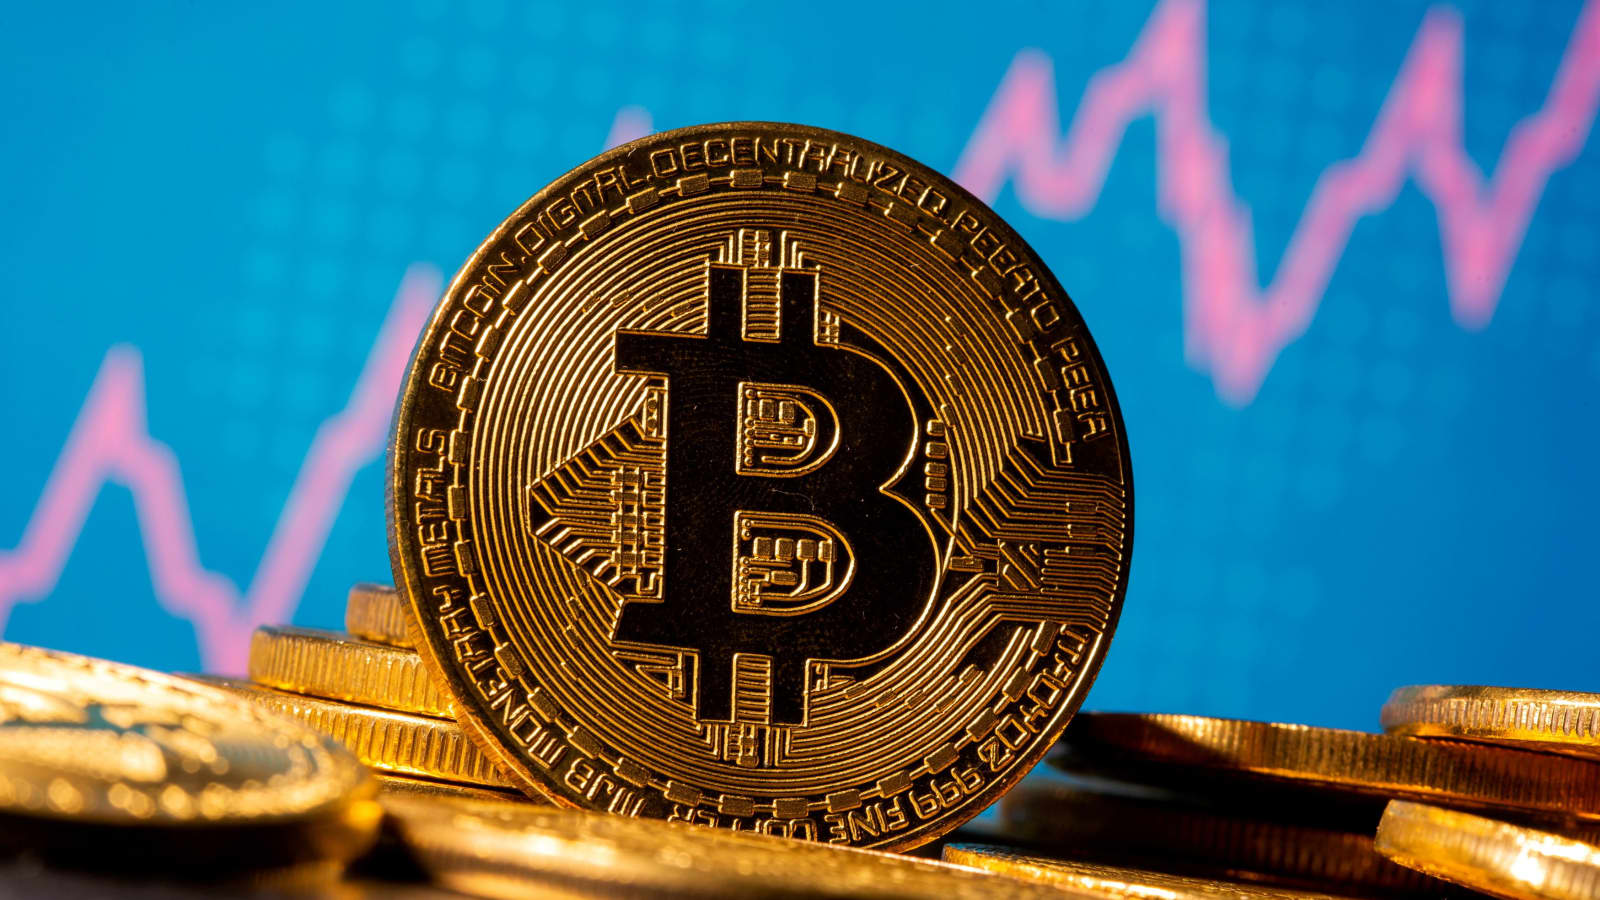 Bitcoin (BTC) rises above $48,000 as crypto market tops $2 trillion